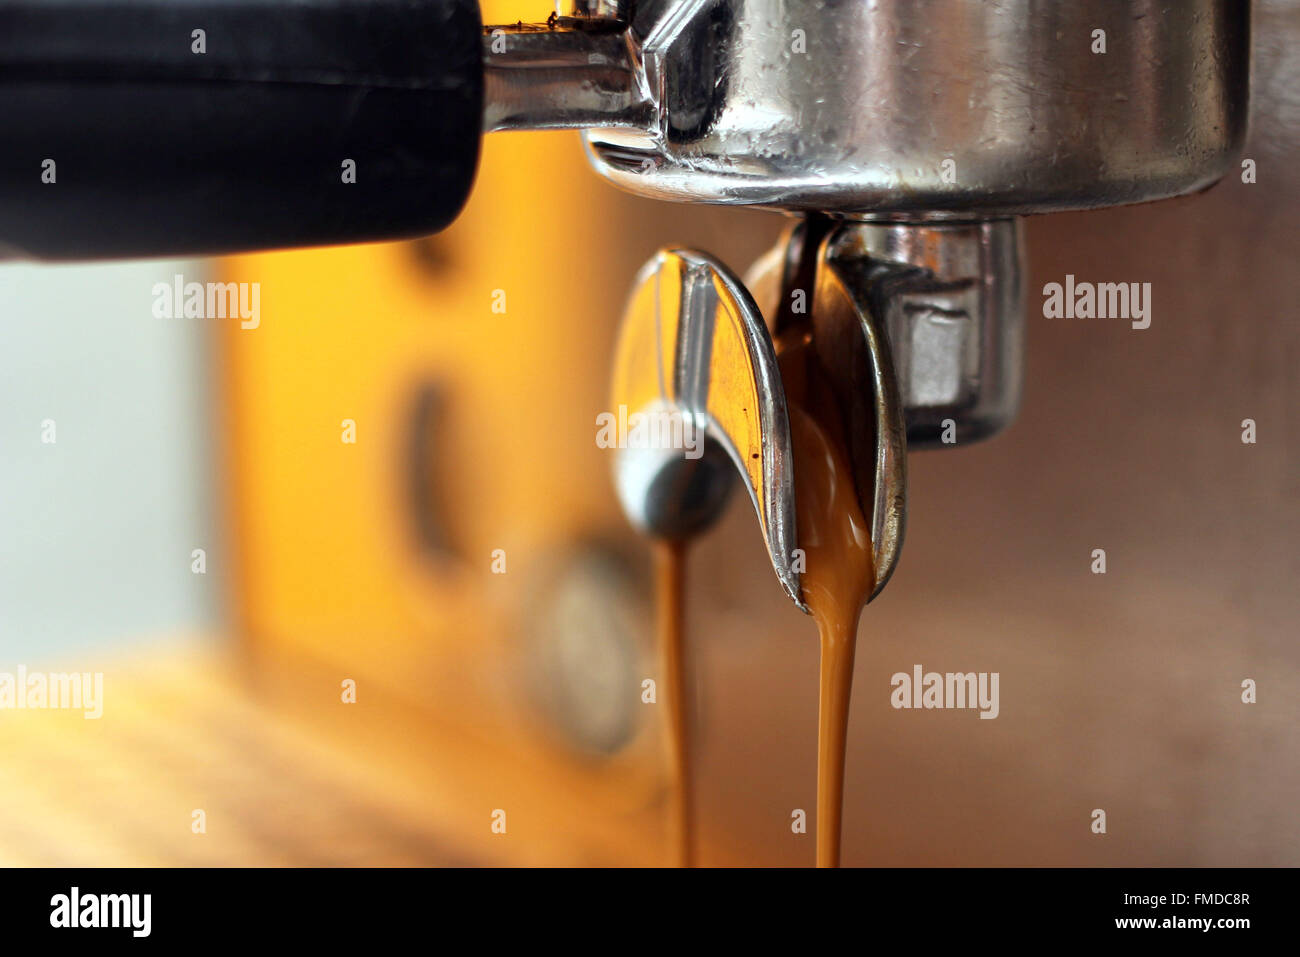 https://c8.alamy.com/comp/FMDC8R/espresso-shot-from-coffee-machine-in-coffee-shop-vintage-color-FMDC8R.jpg